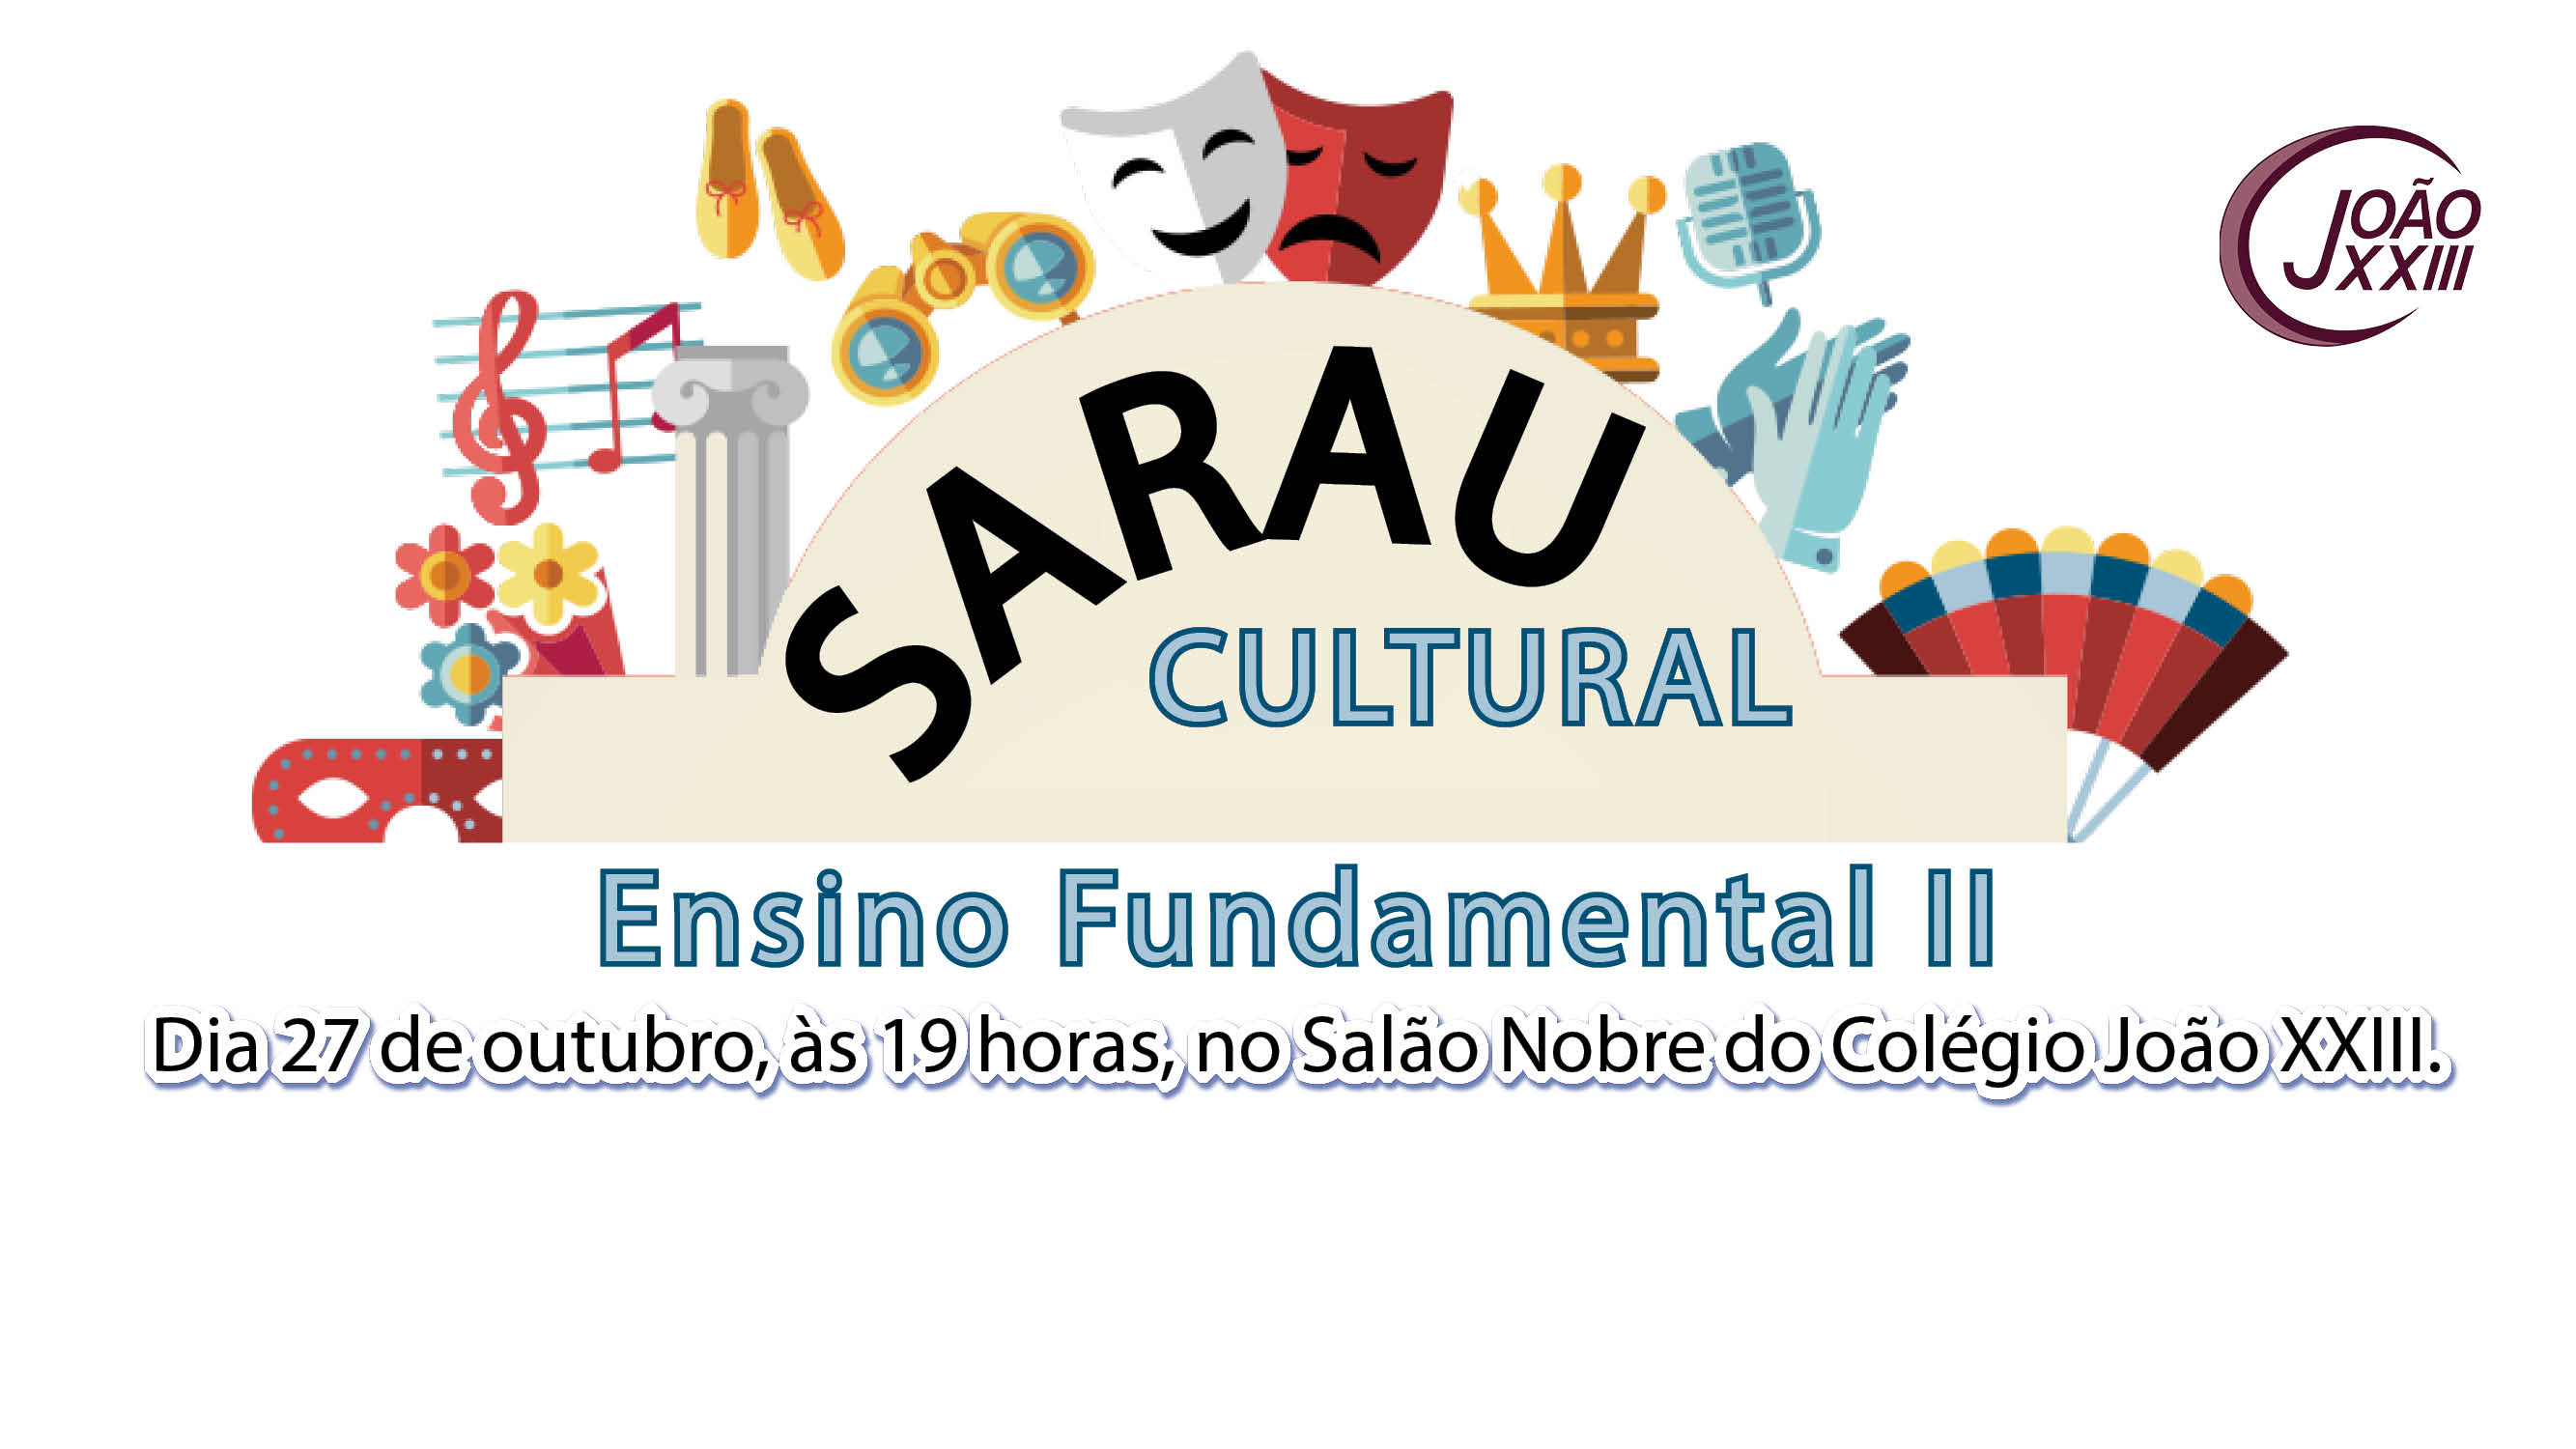 You are currently viewing Sarau Cultural do Ensino Fundamental II